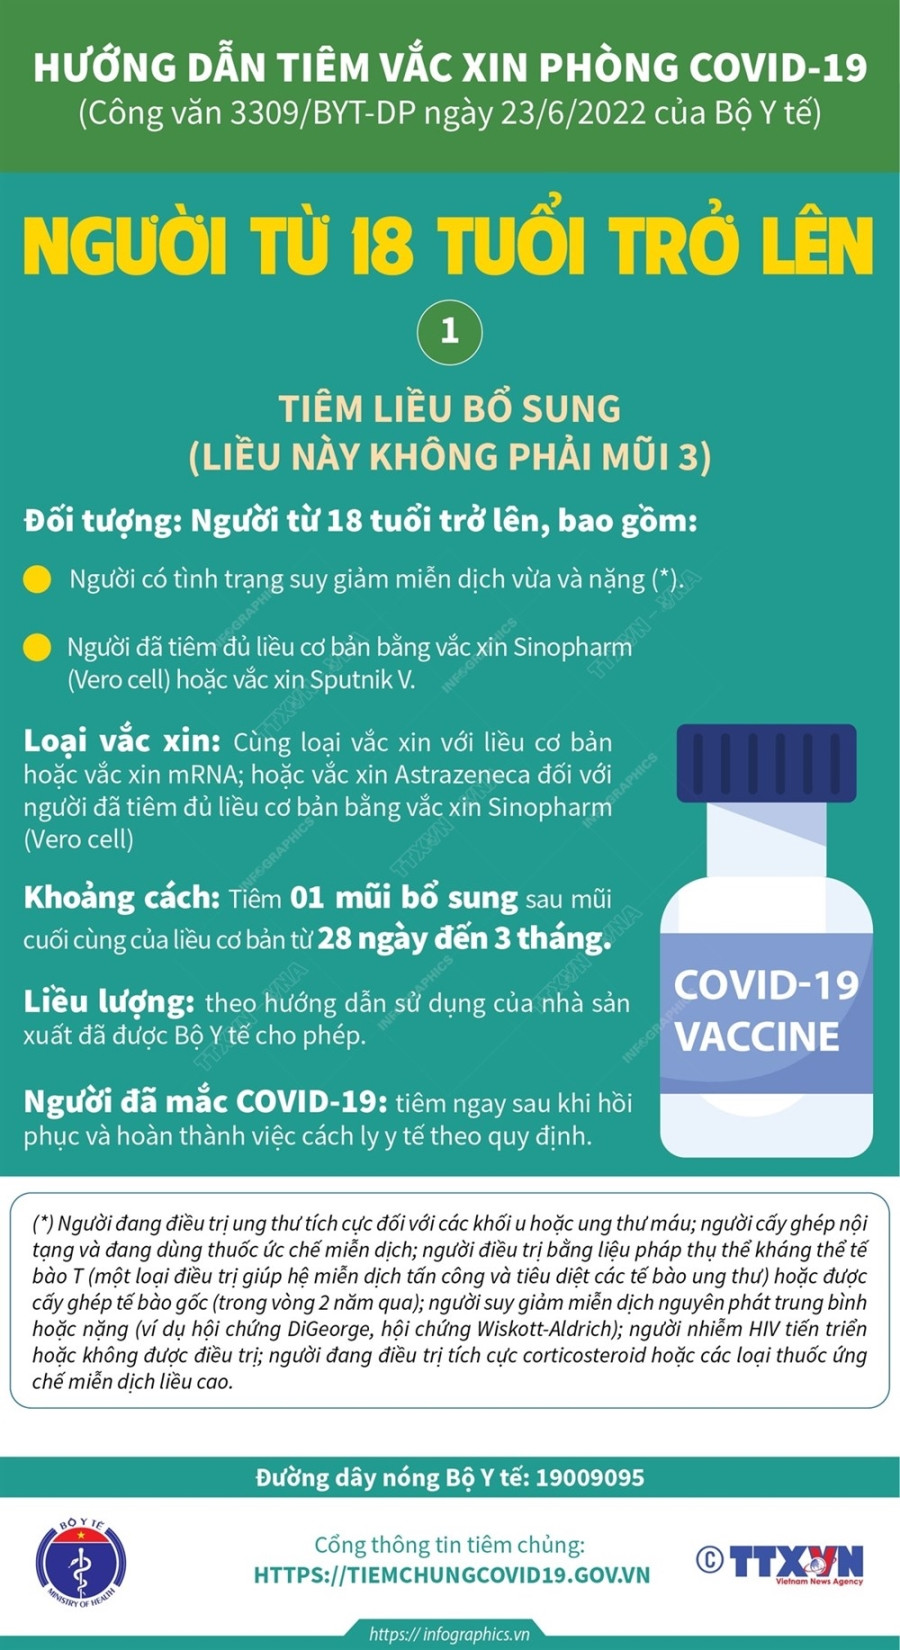 Huong dan tiem vaccine phong COVID-19 cho nguoi tu 18 tuoi tro len hinh anh 1